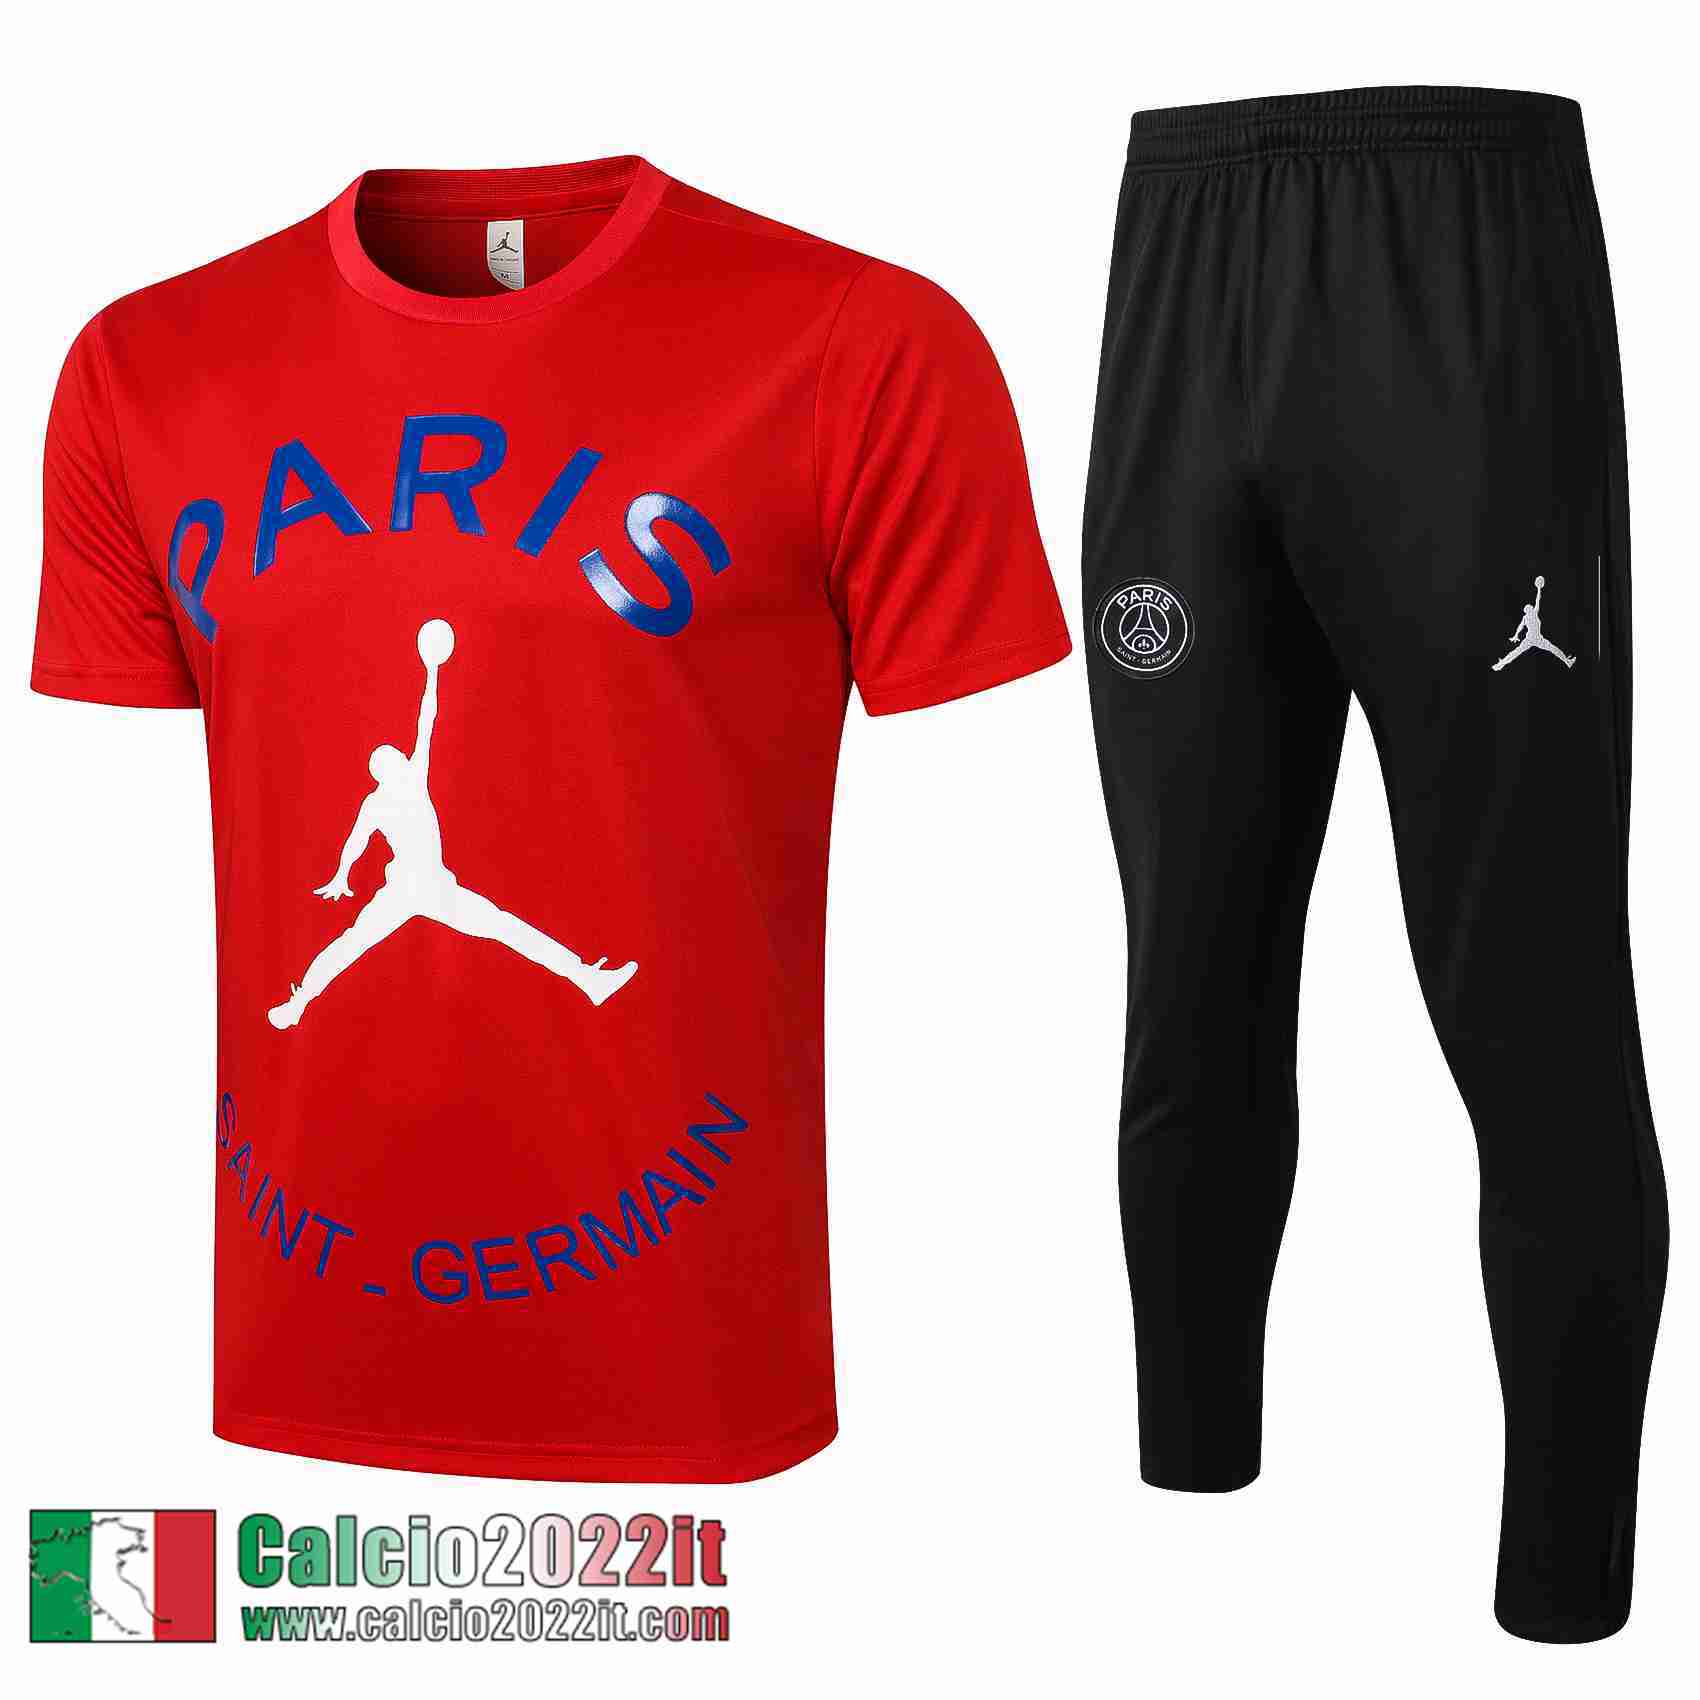 Paris Saint Germain Psg Maglia T-shirt Air Jordan Rossa Pl21 2021 2022